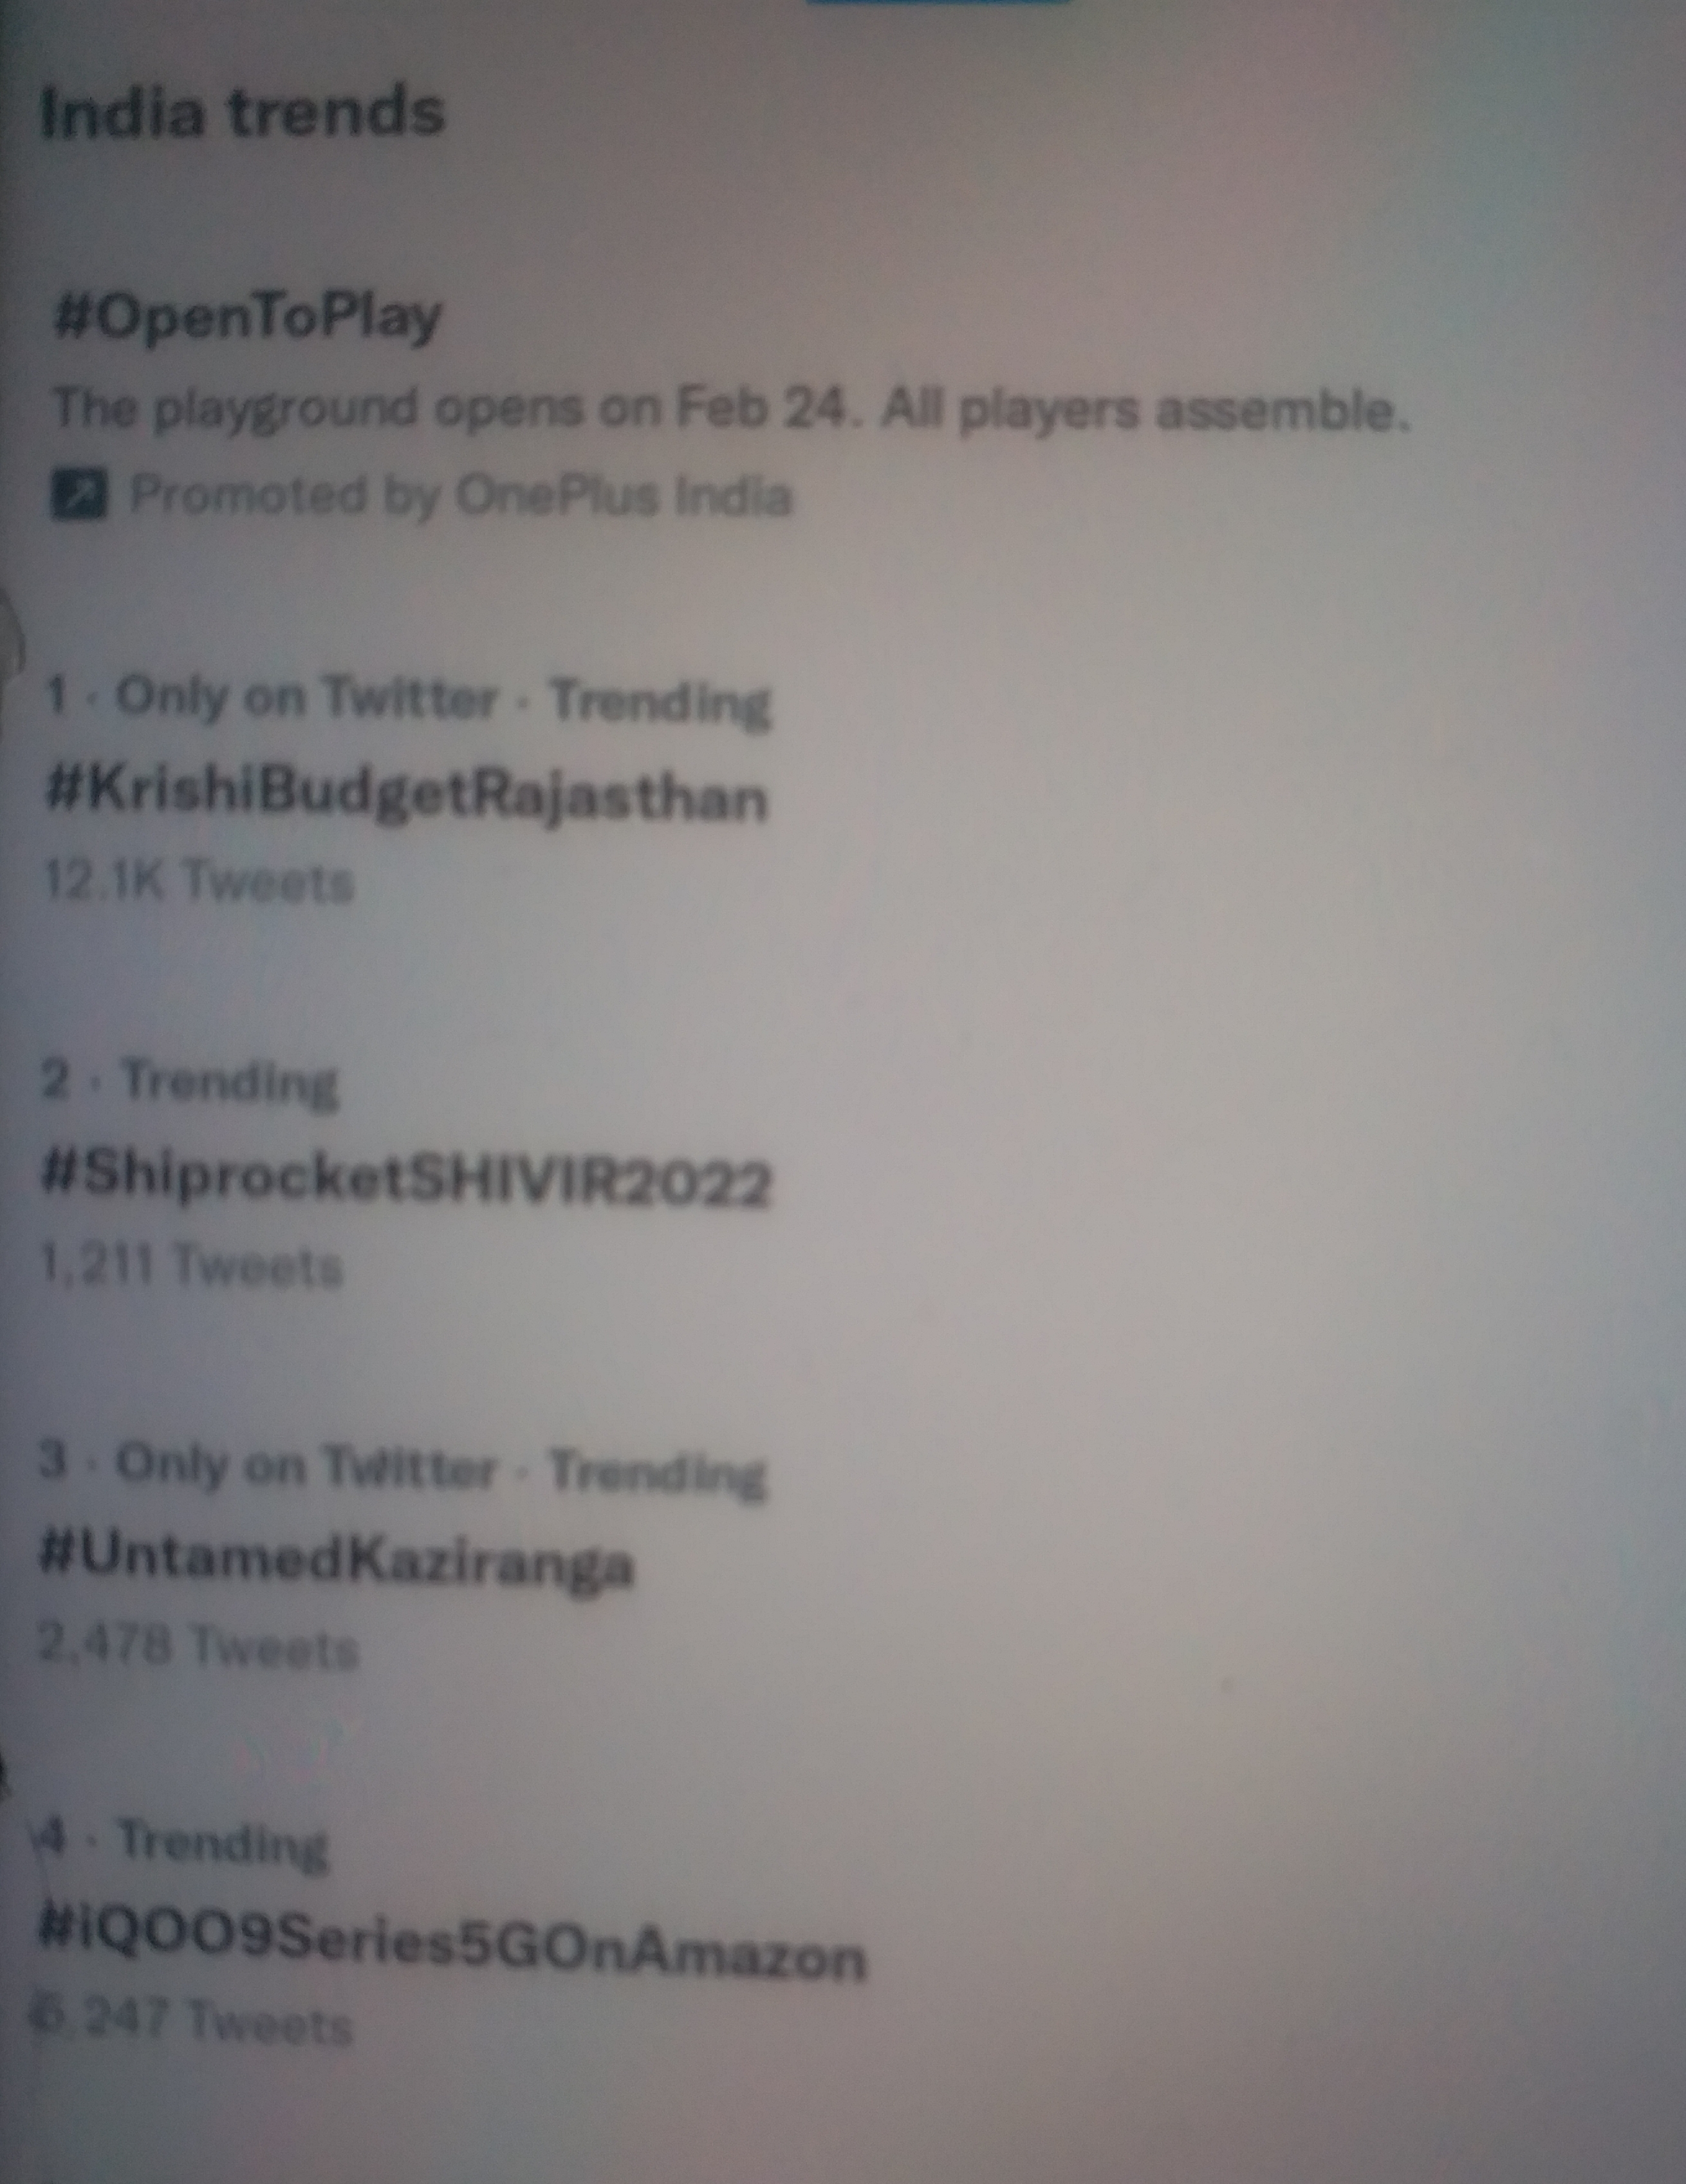 Krishi Budget Rajasthan on Twitter